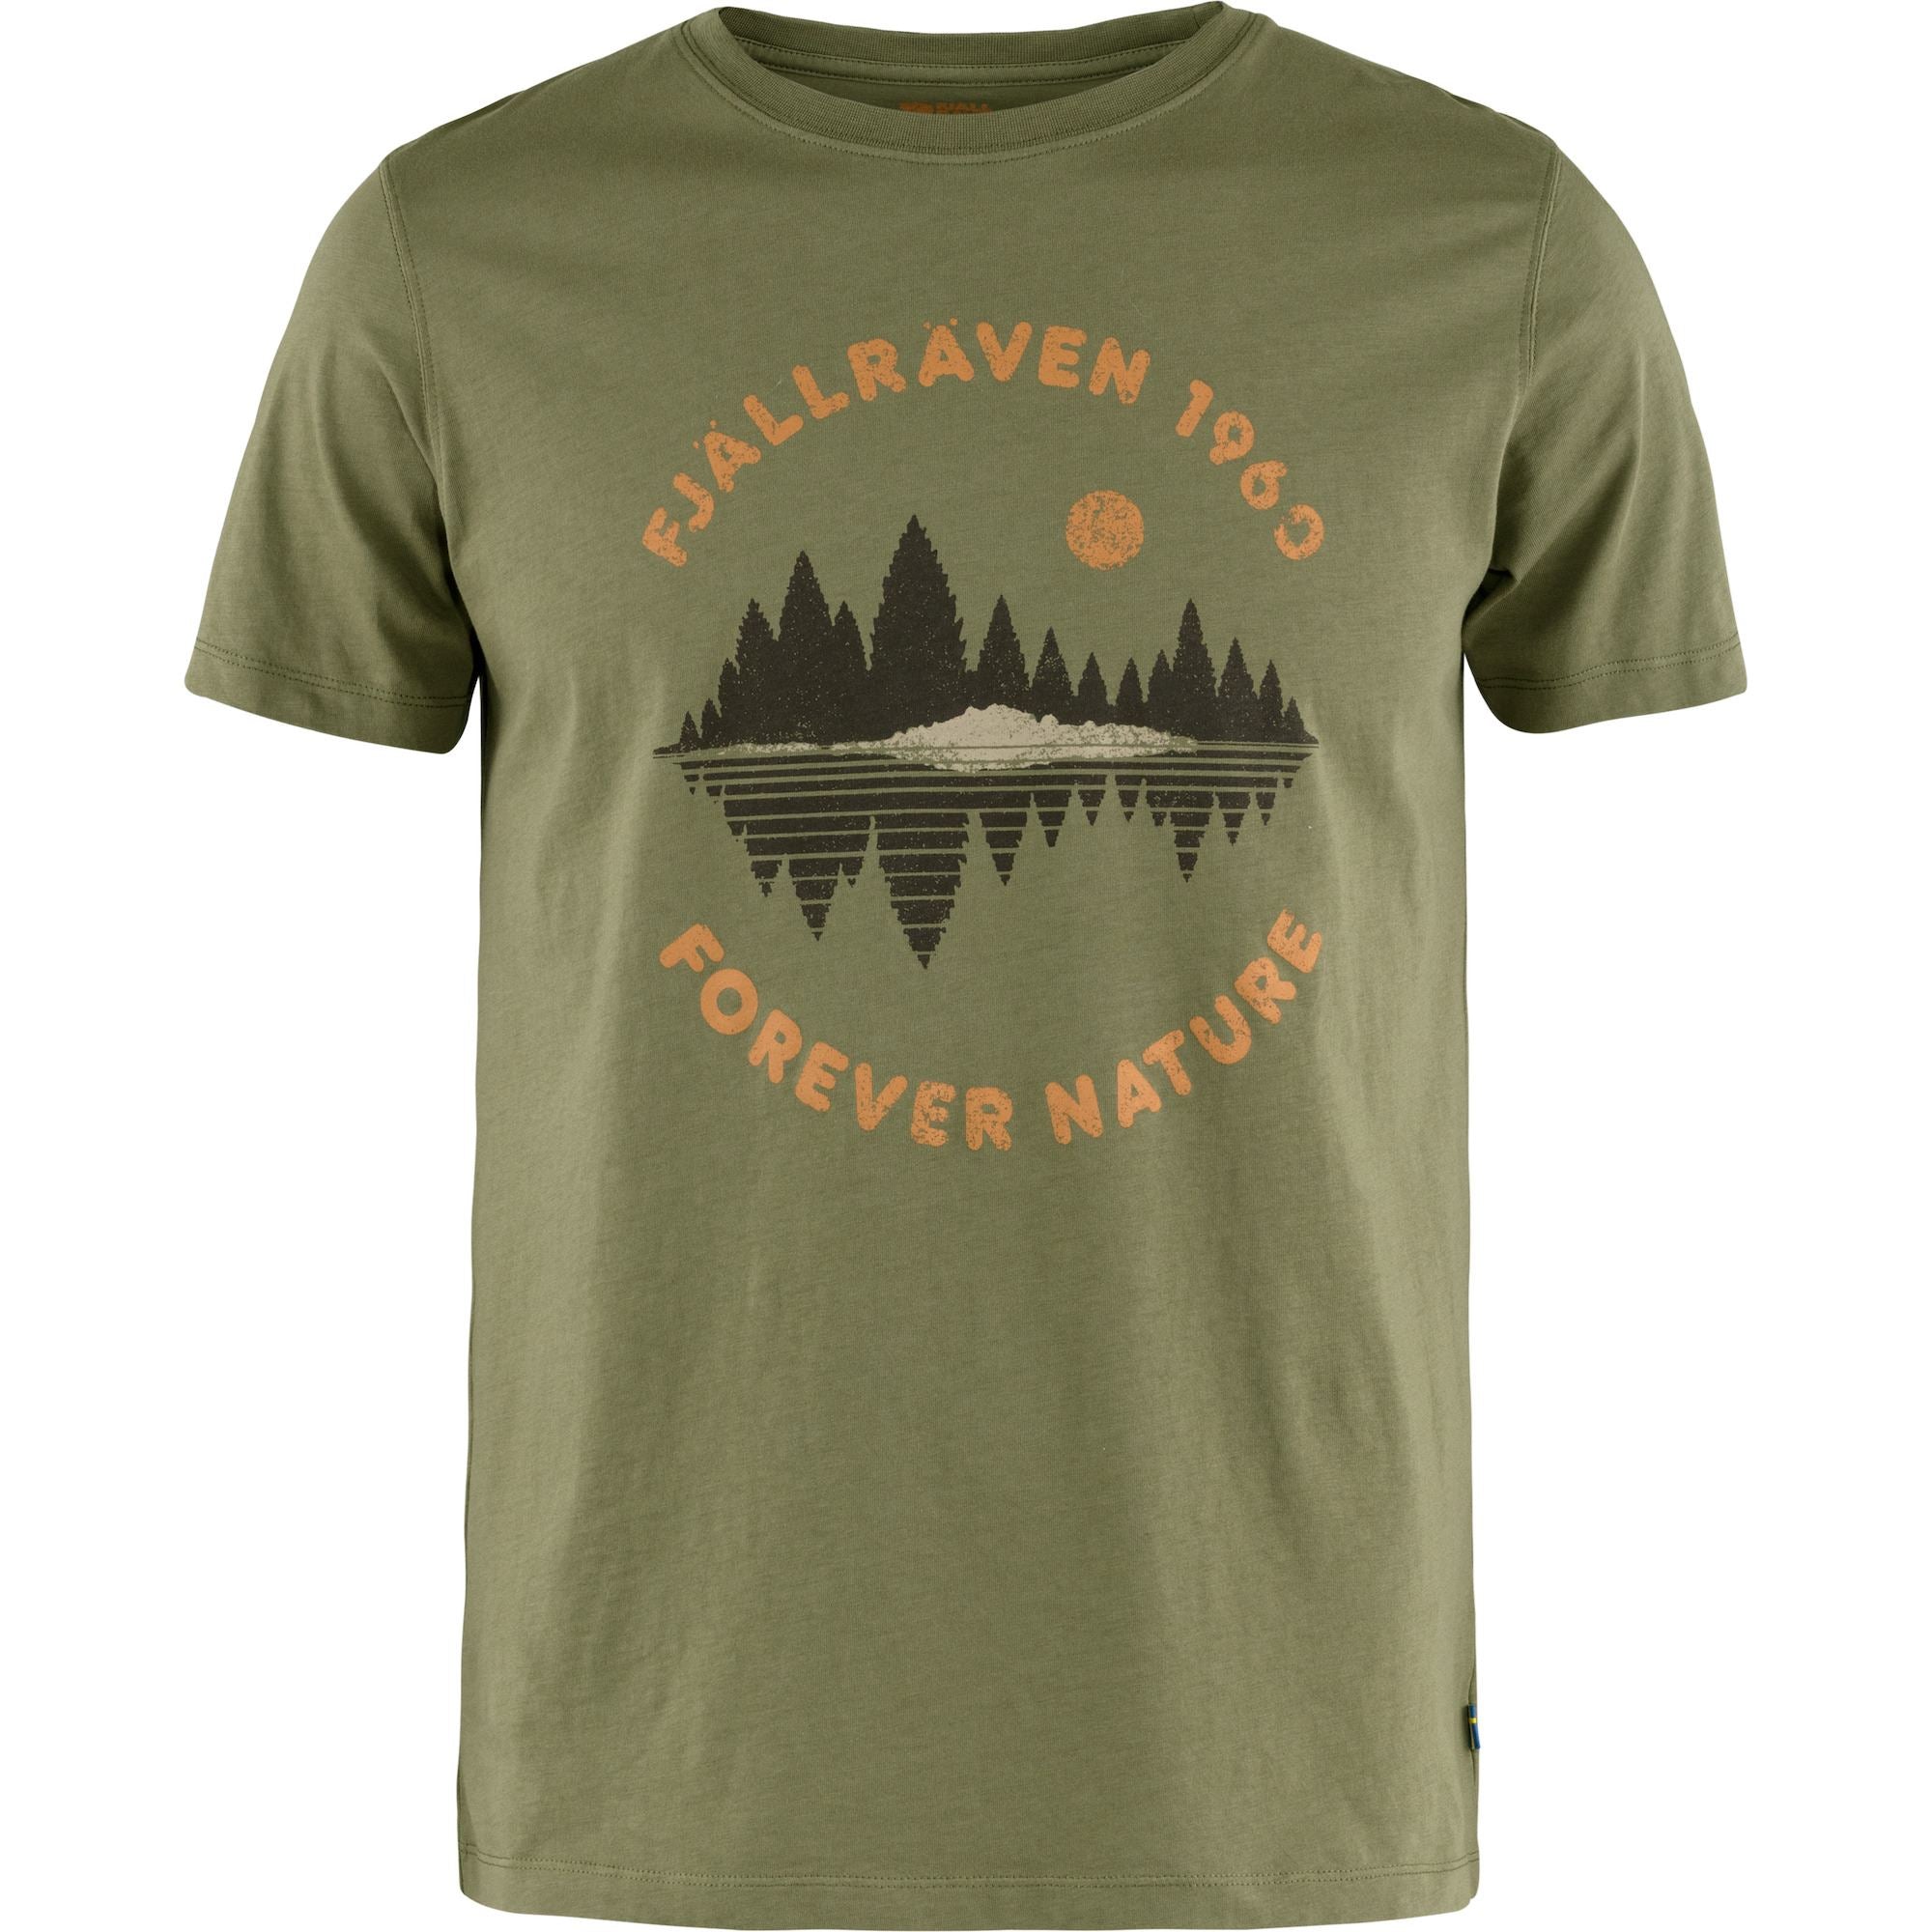 Forest Mirror T-shirt M